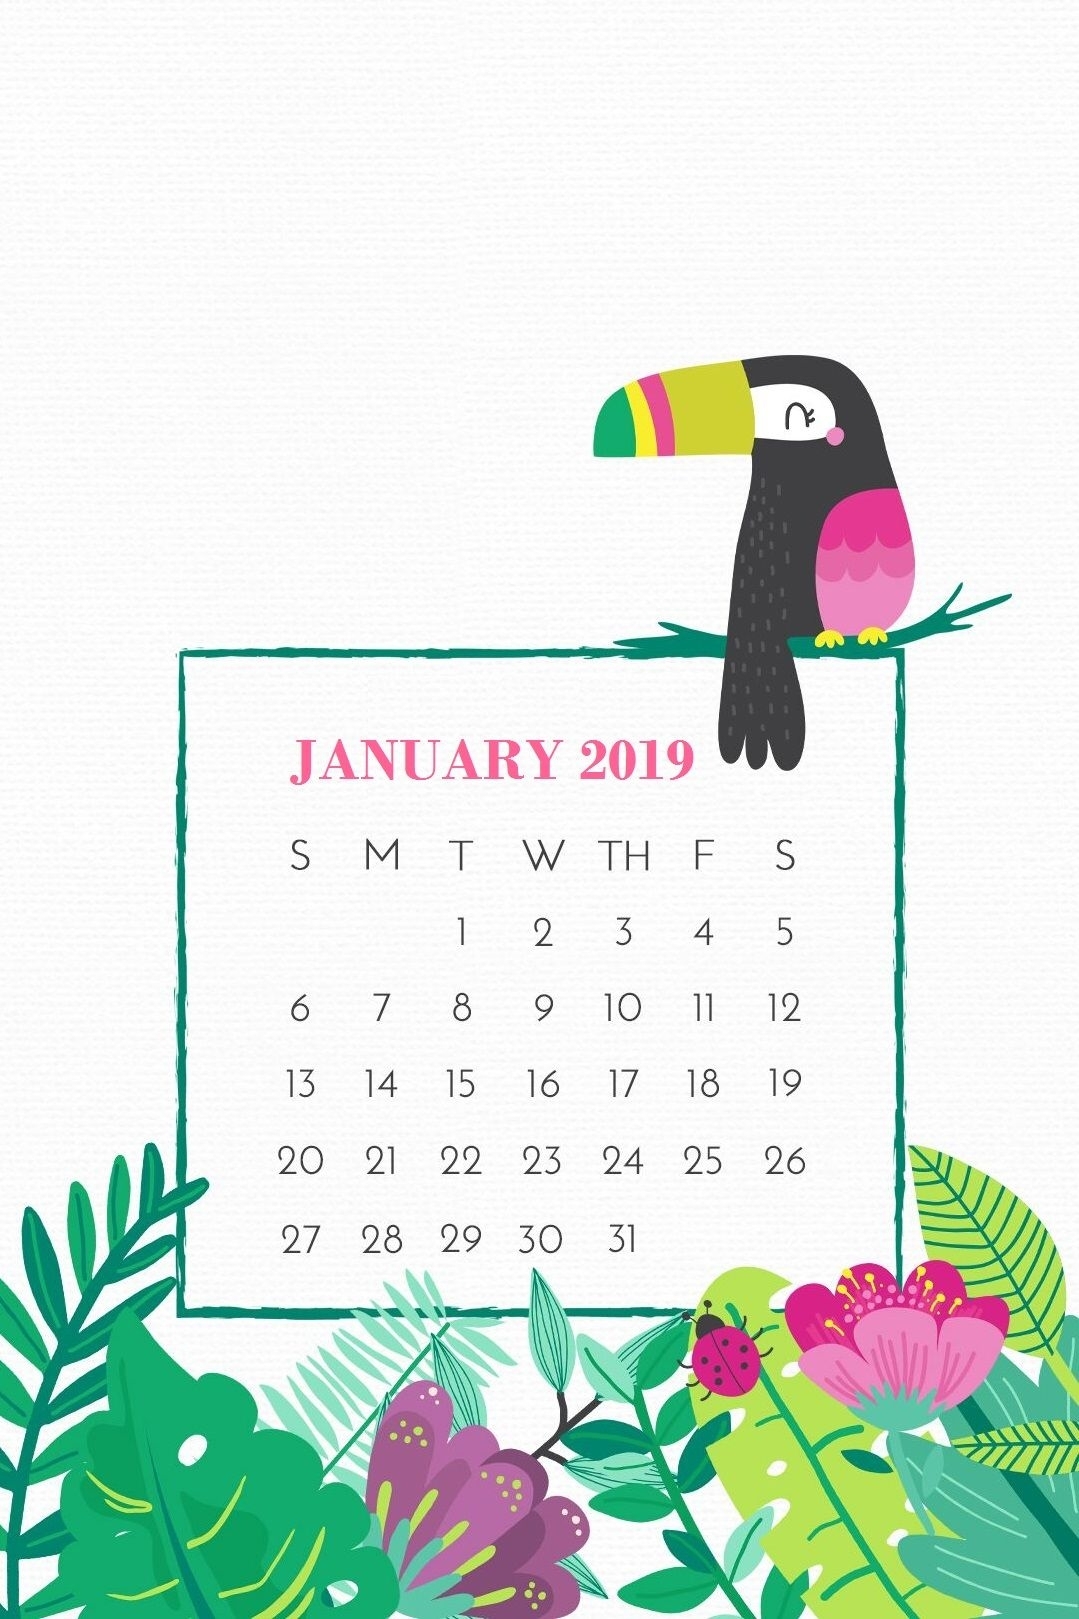 January 2019 Smartphone Calendar Screensaver Background in Calendars For January Background Designs